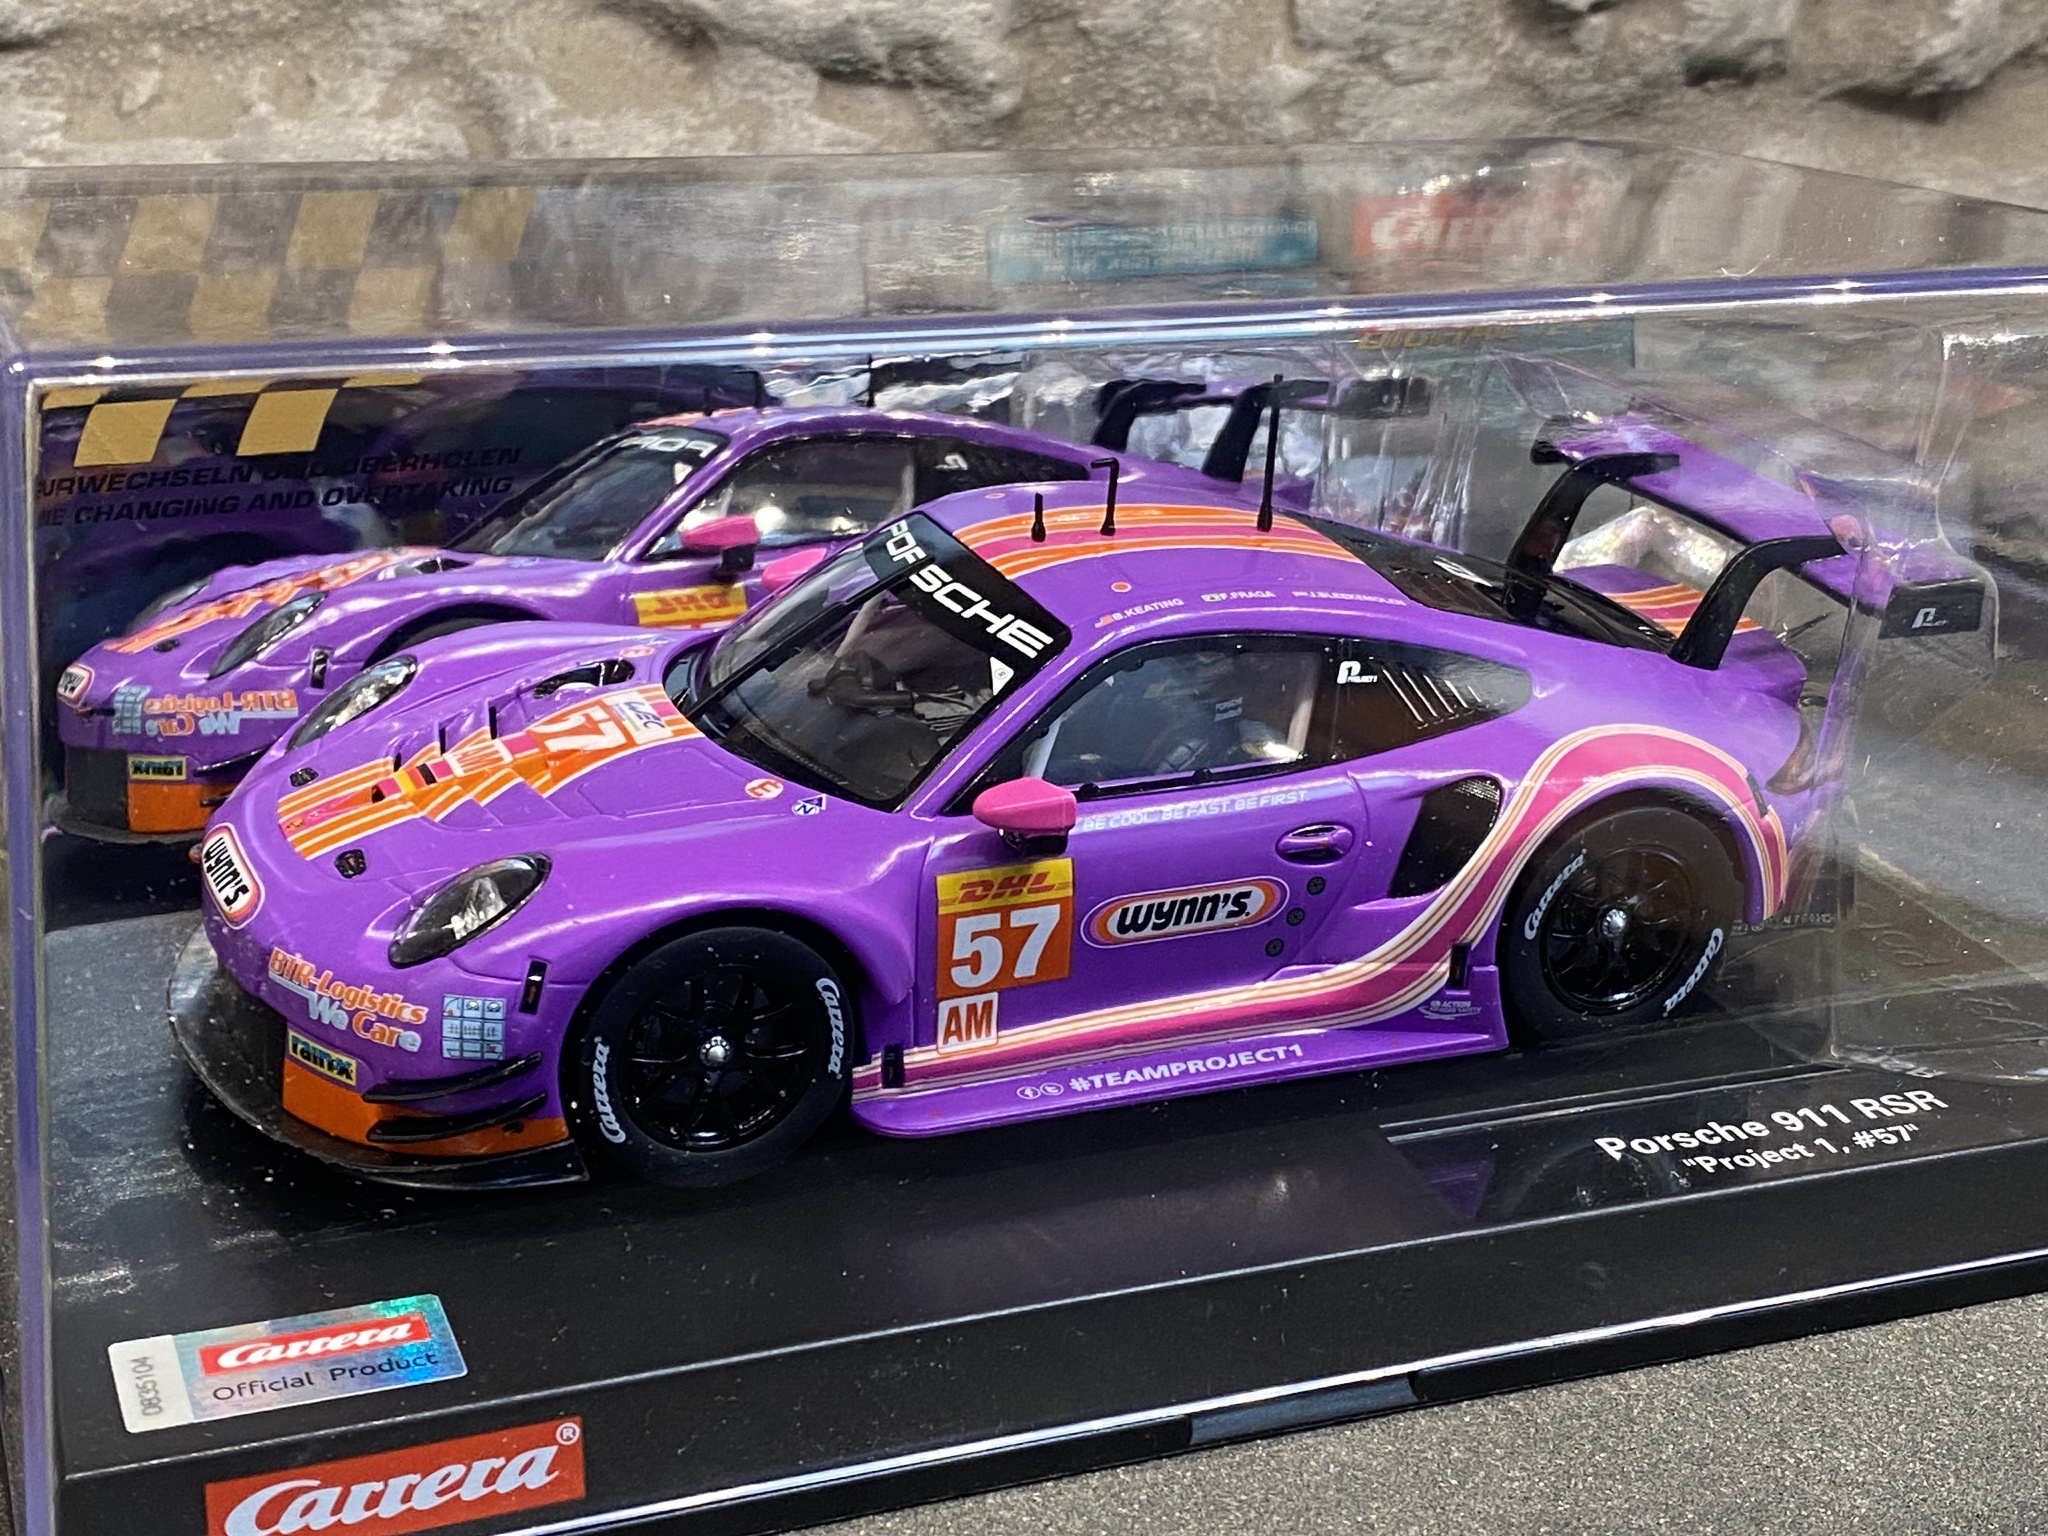 Skala 1/24 Digital/Analog bil till bilbana fr Carrera: Porsche 911 RSR Project 1 #57